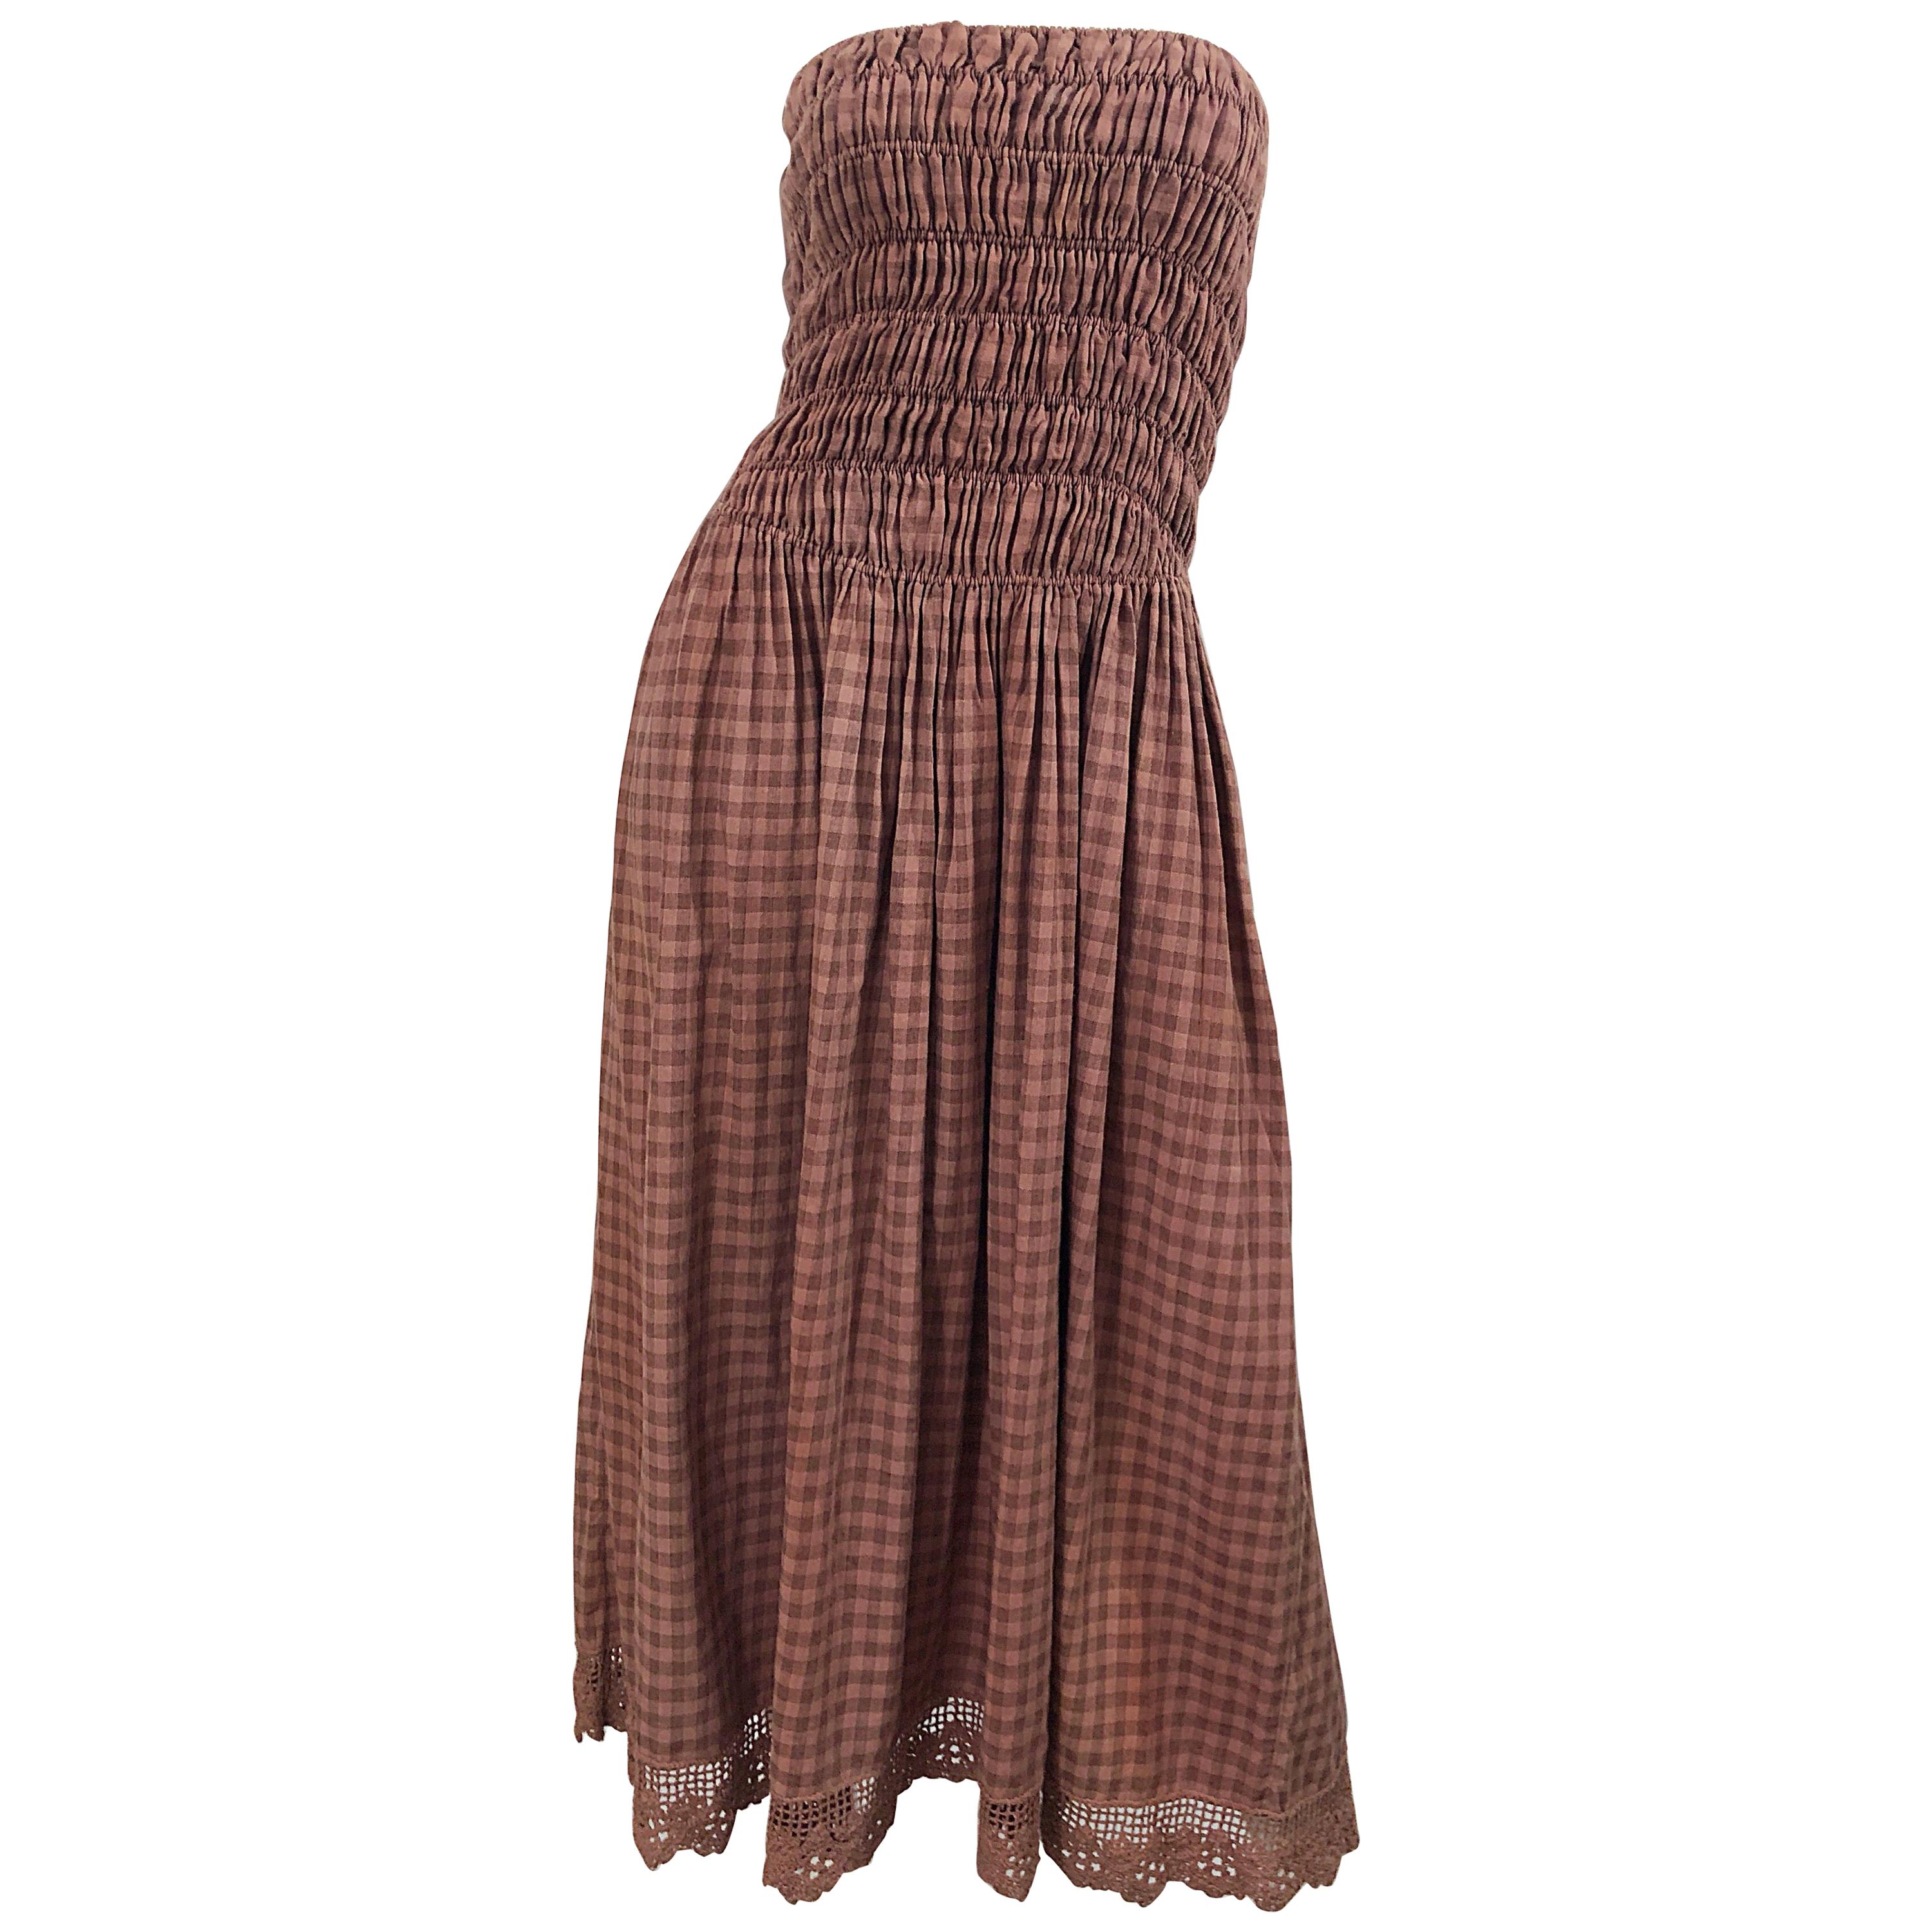 1970s Geoffrey Beene Dusty Rose Pink + Brown Crochet Strapless Ombre Midi Dress